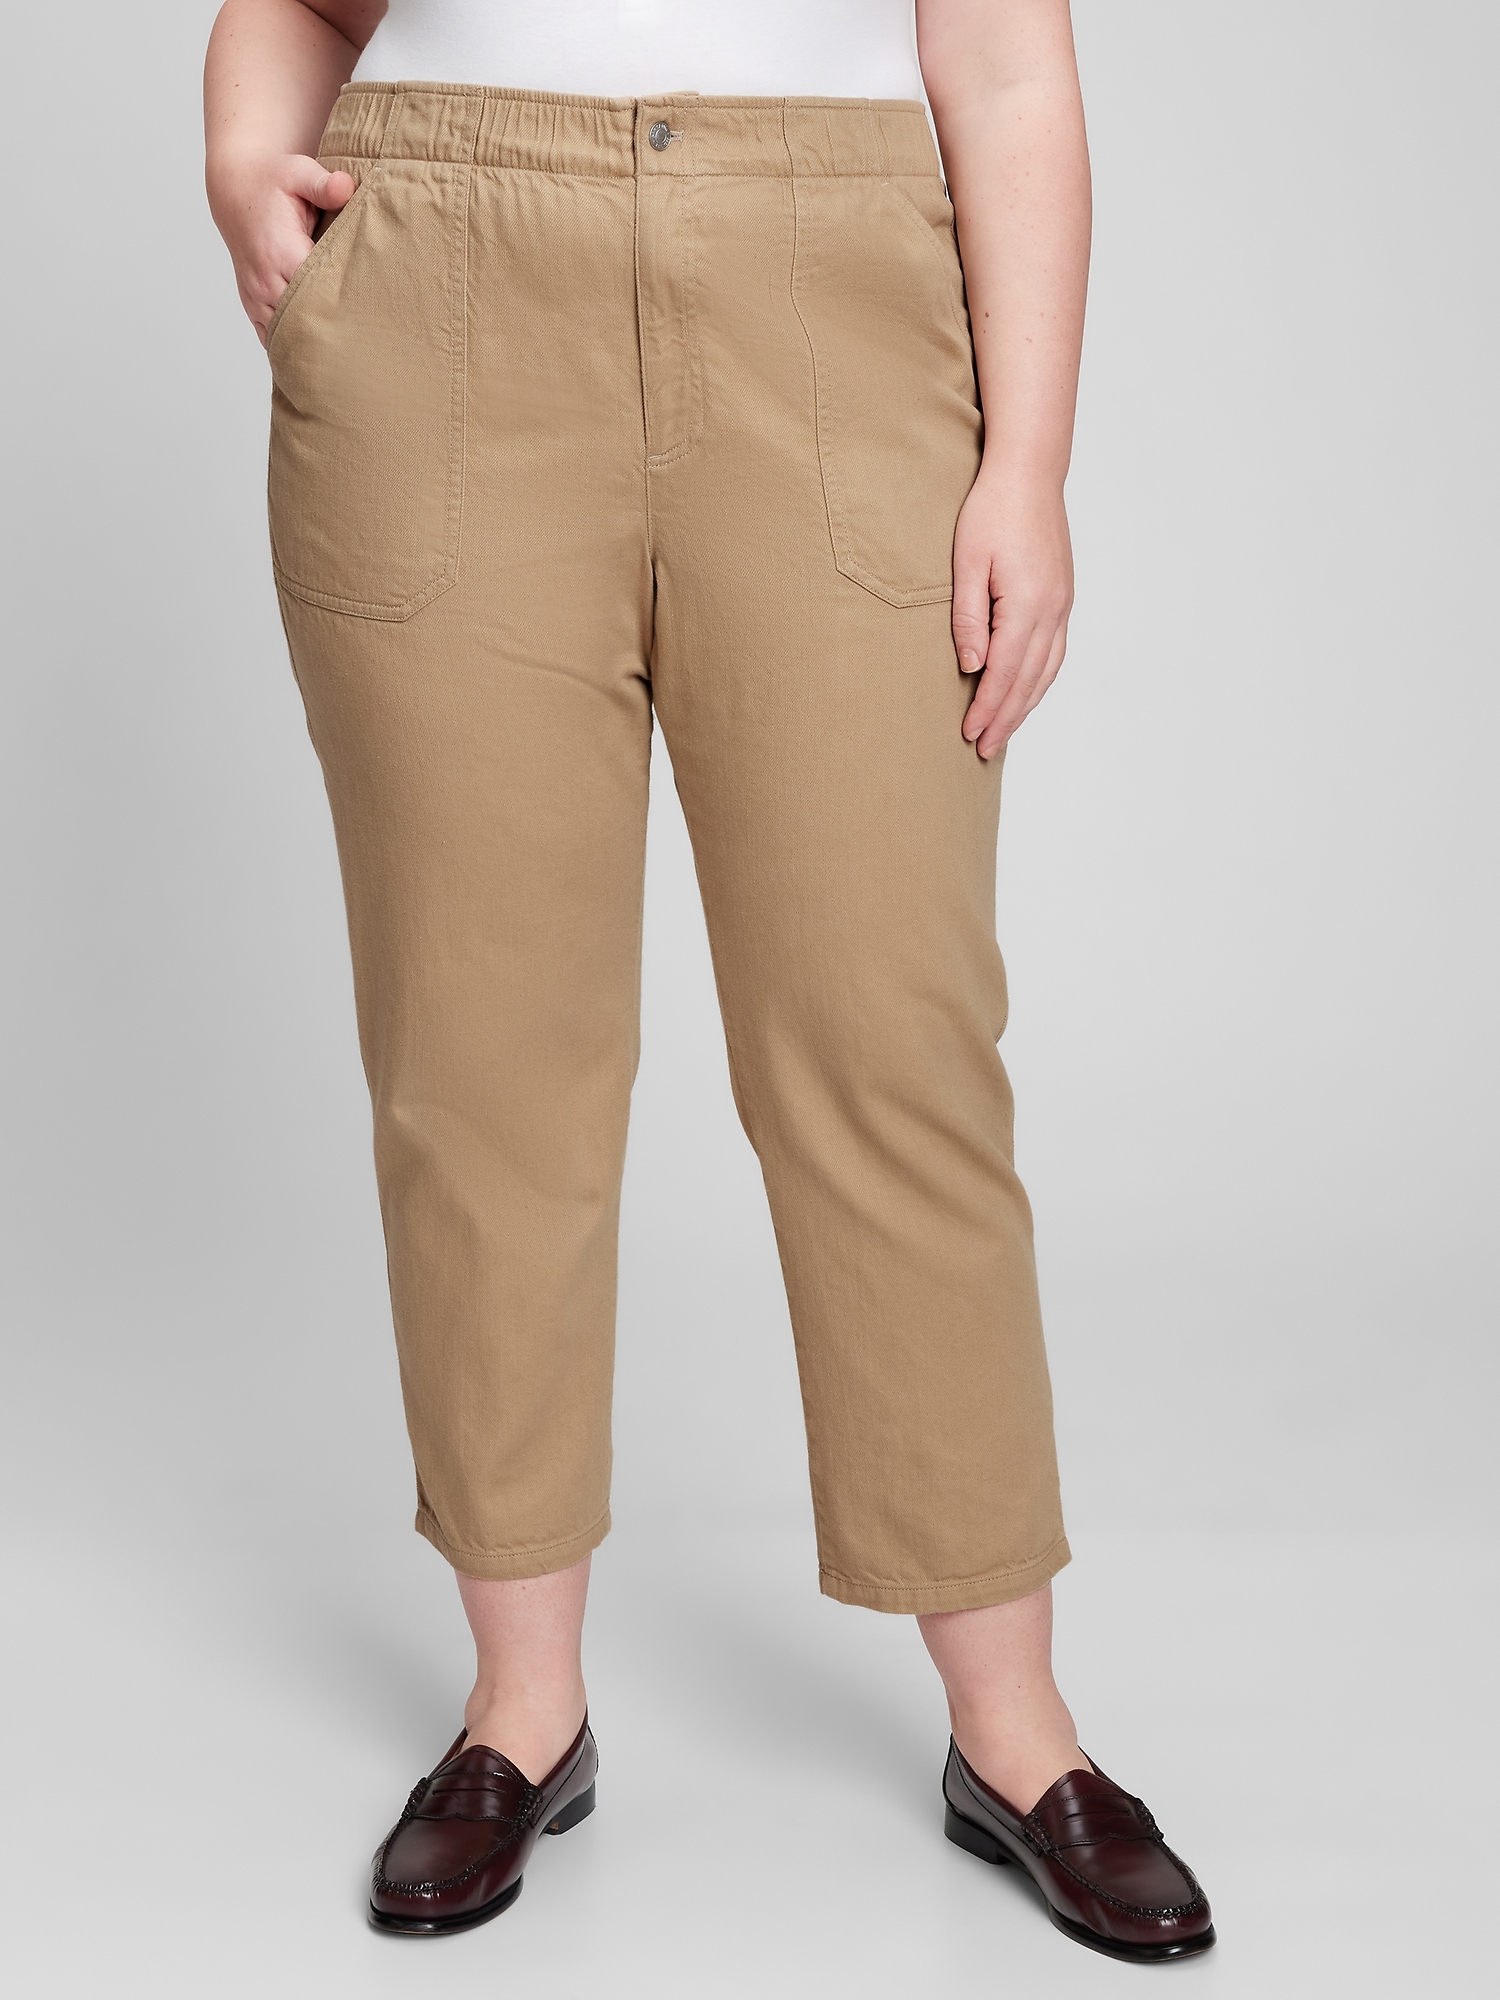 Khaki Pants - High Waist Paperbag Pants - Button Dly Closure Paperbag Pants